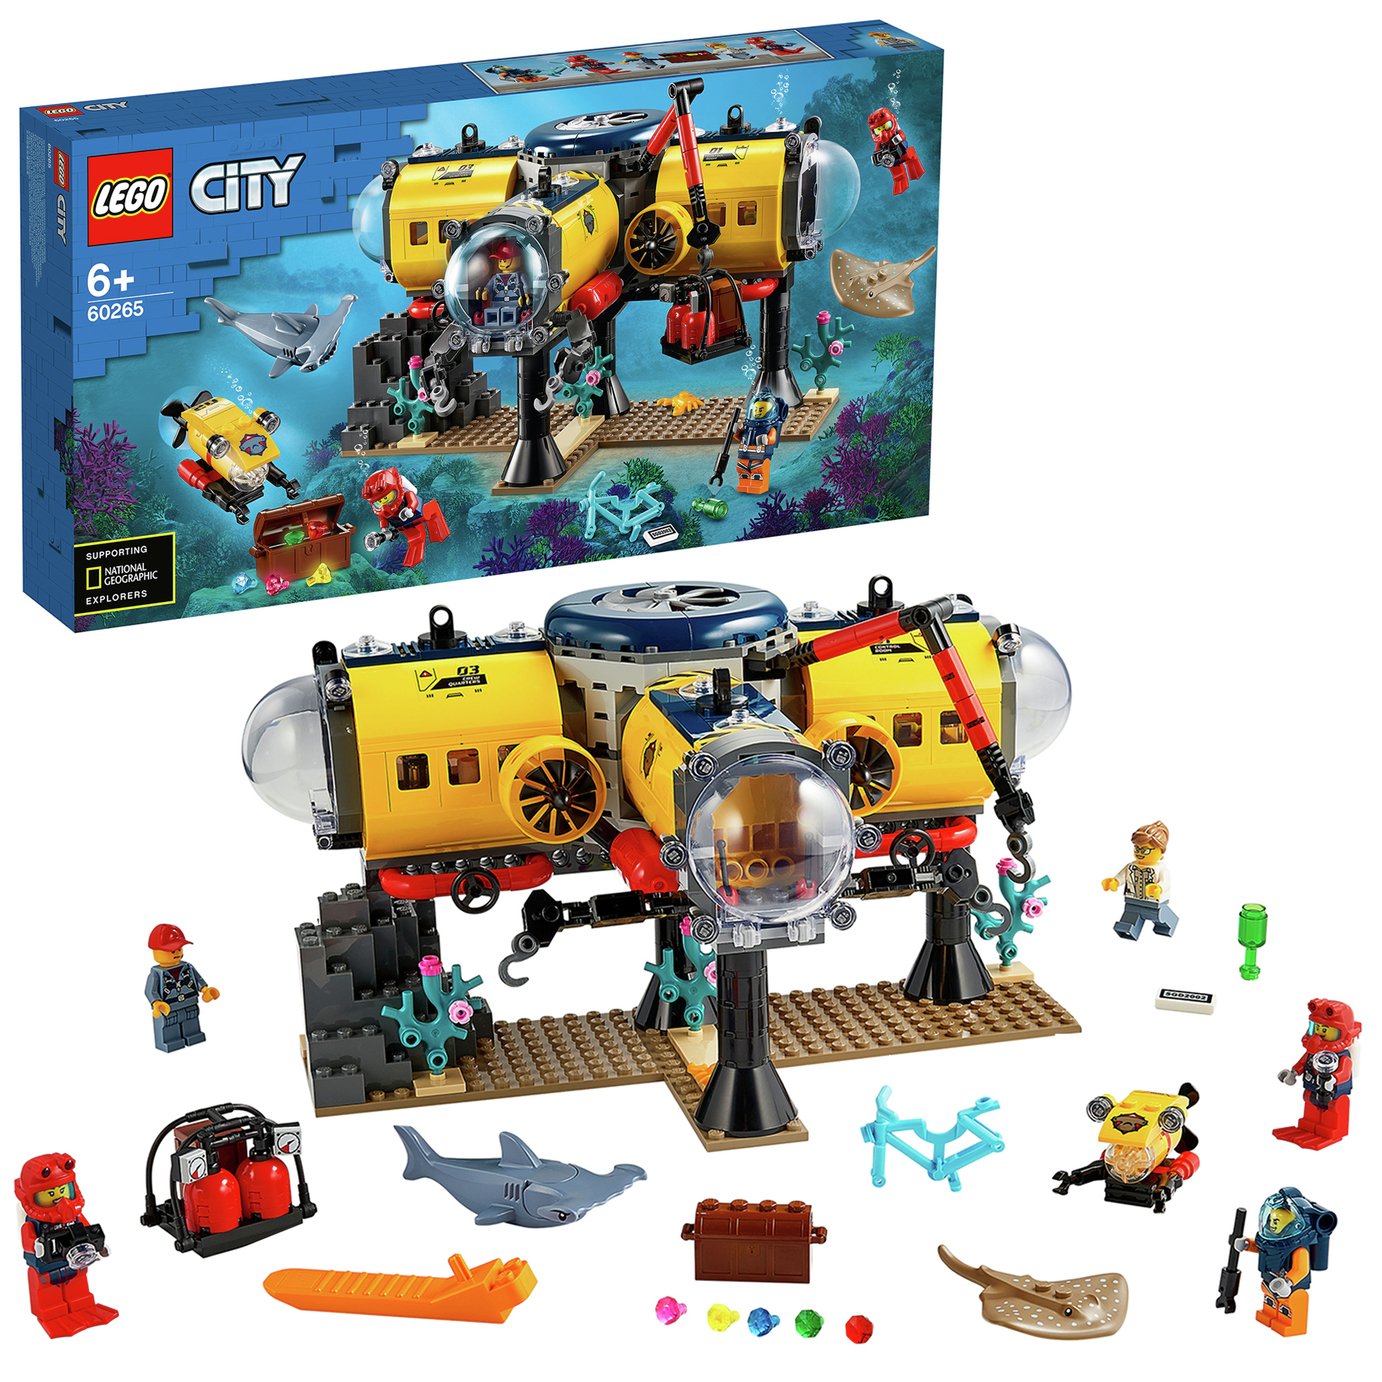 LEGO City Ocean Exploration Base Underwater Set Review